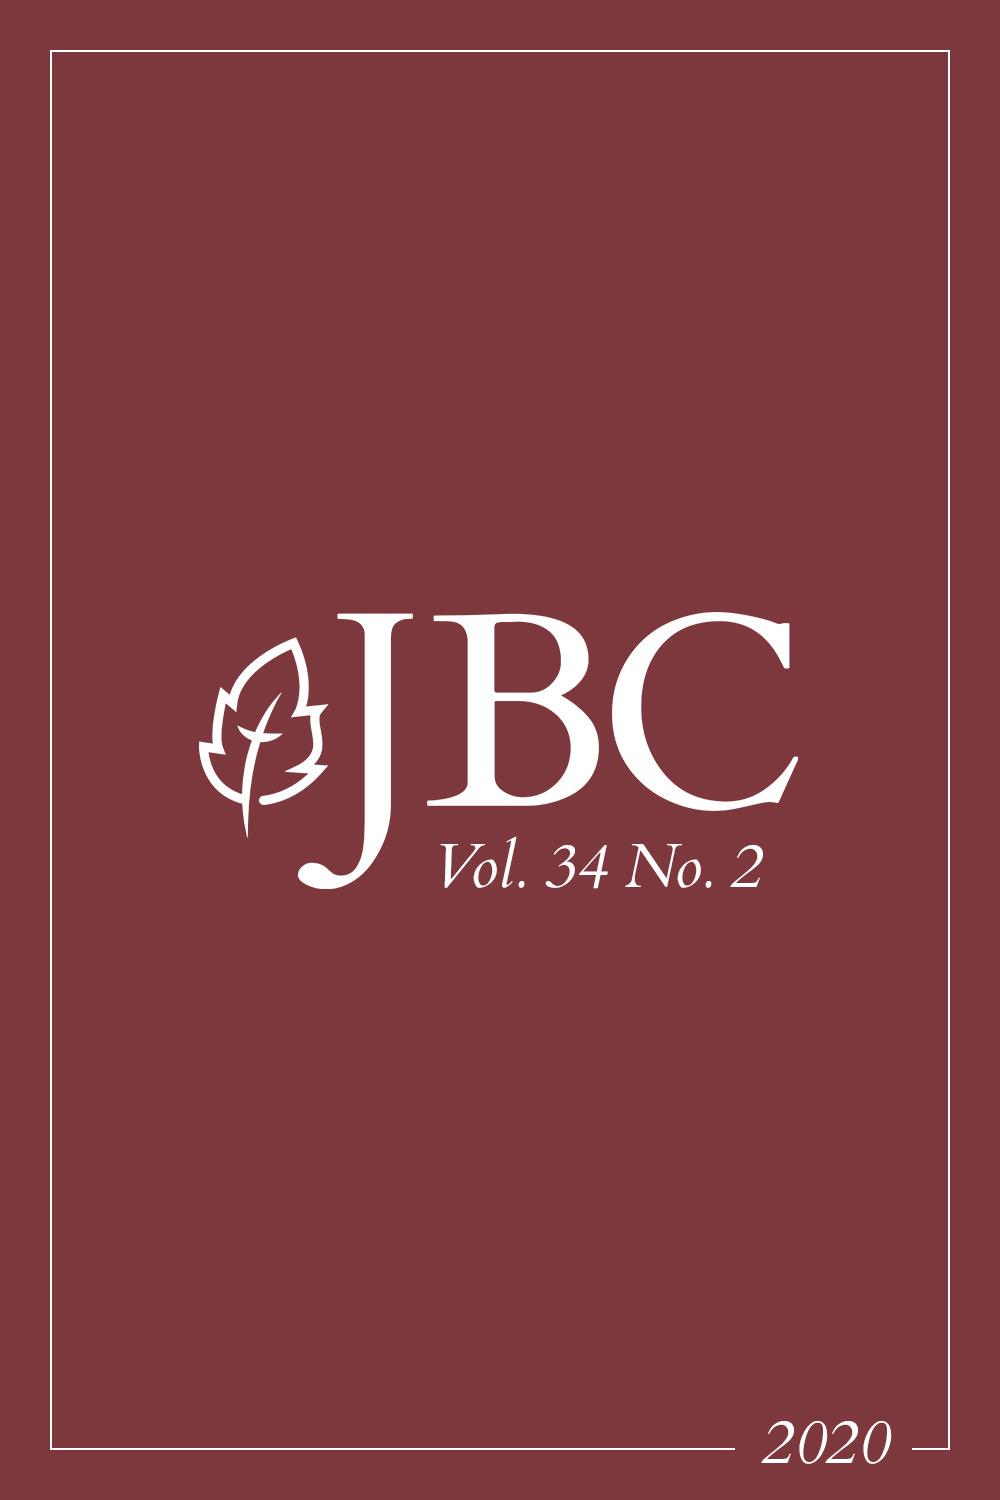 JBC Volume 34:2 (2020) PDF Featured Image